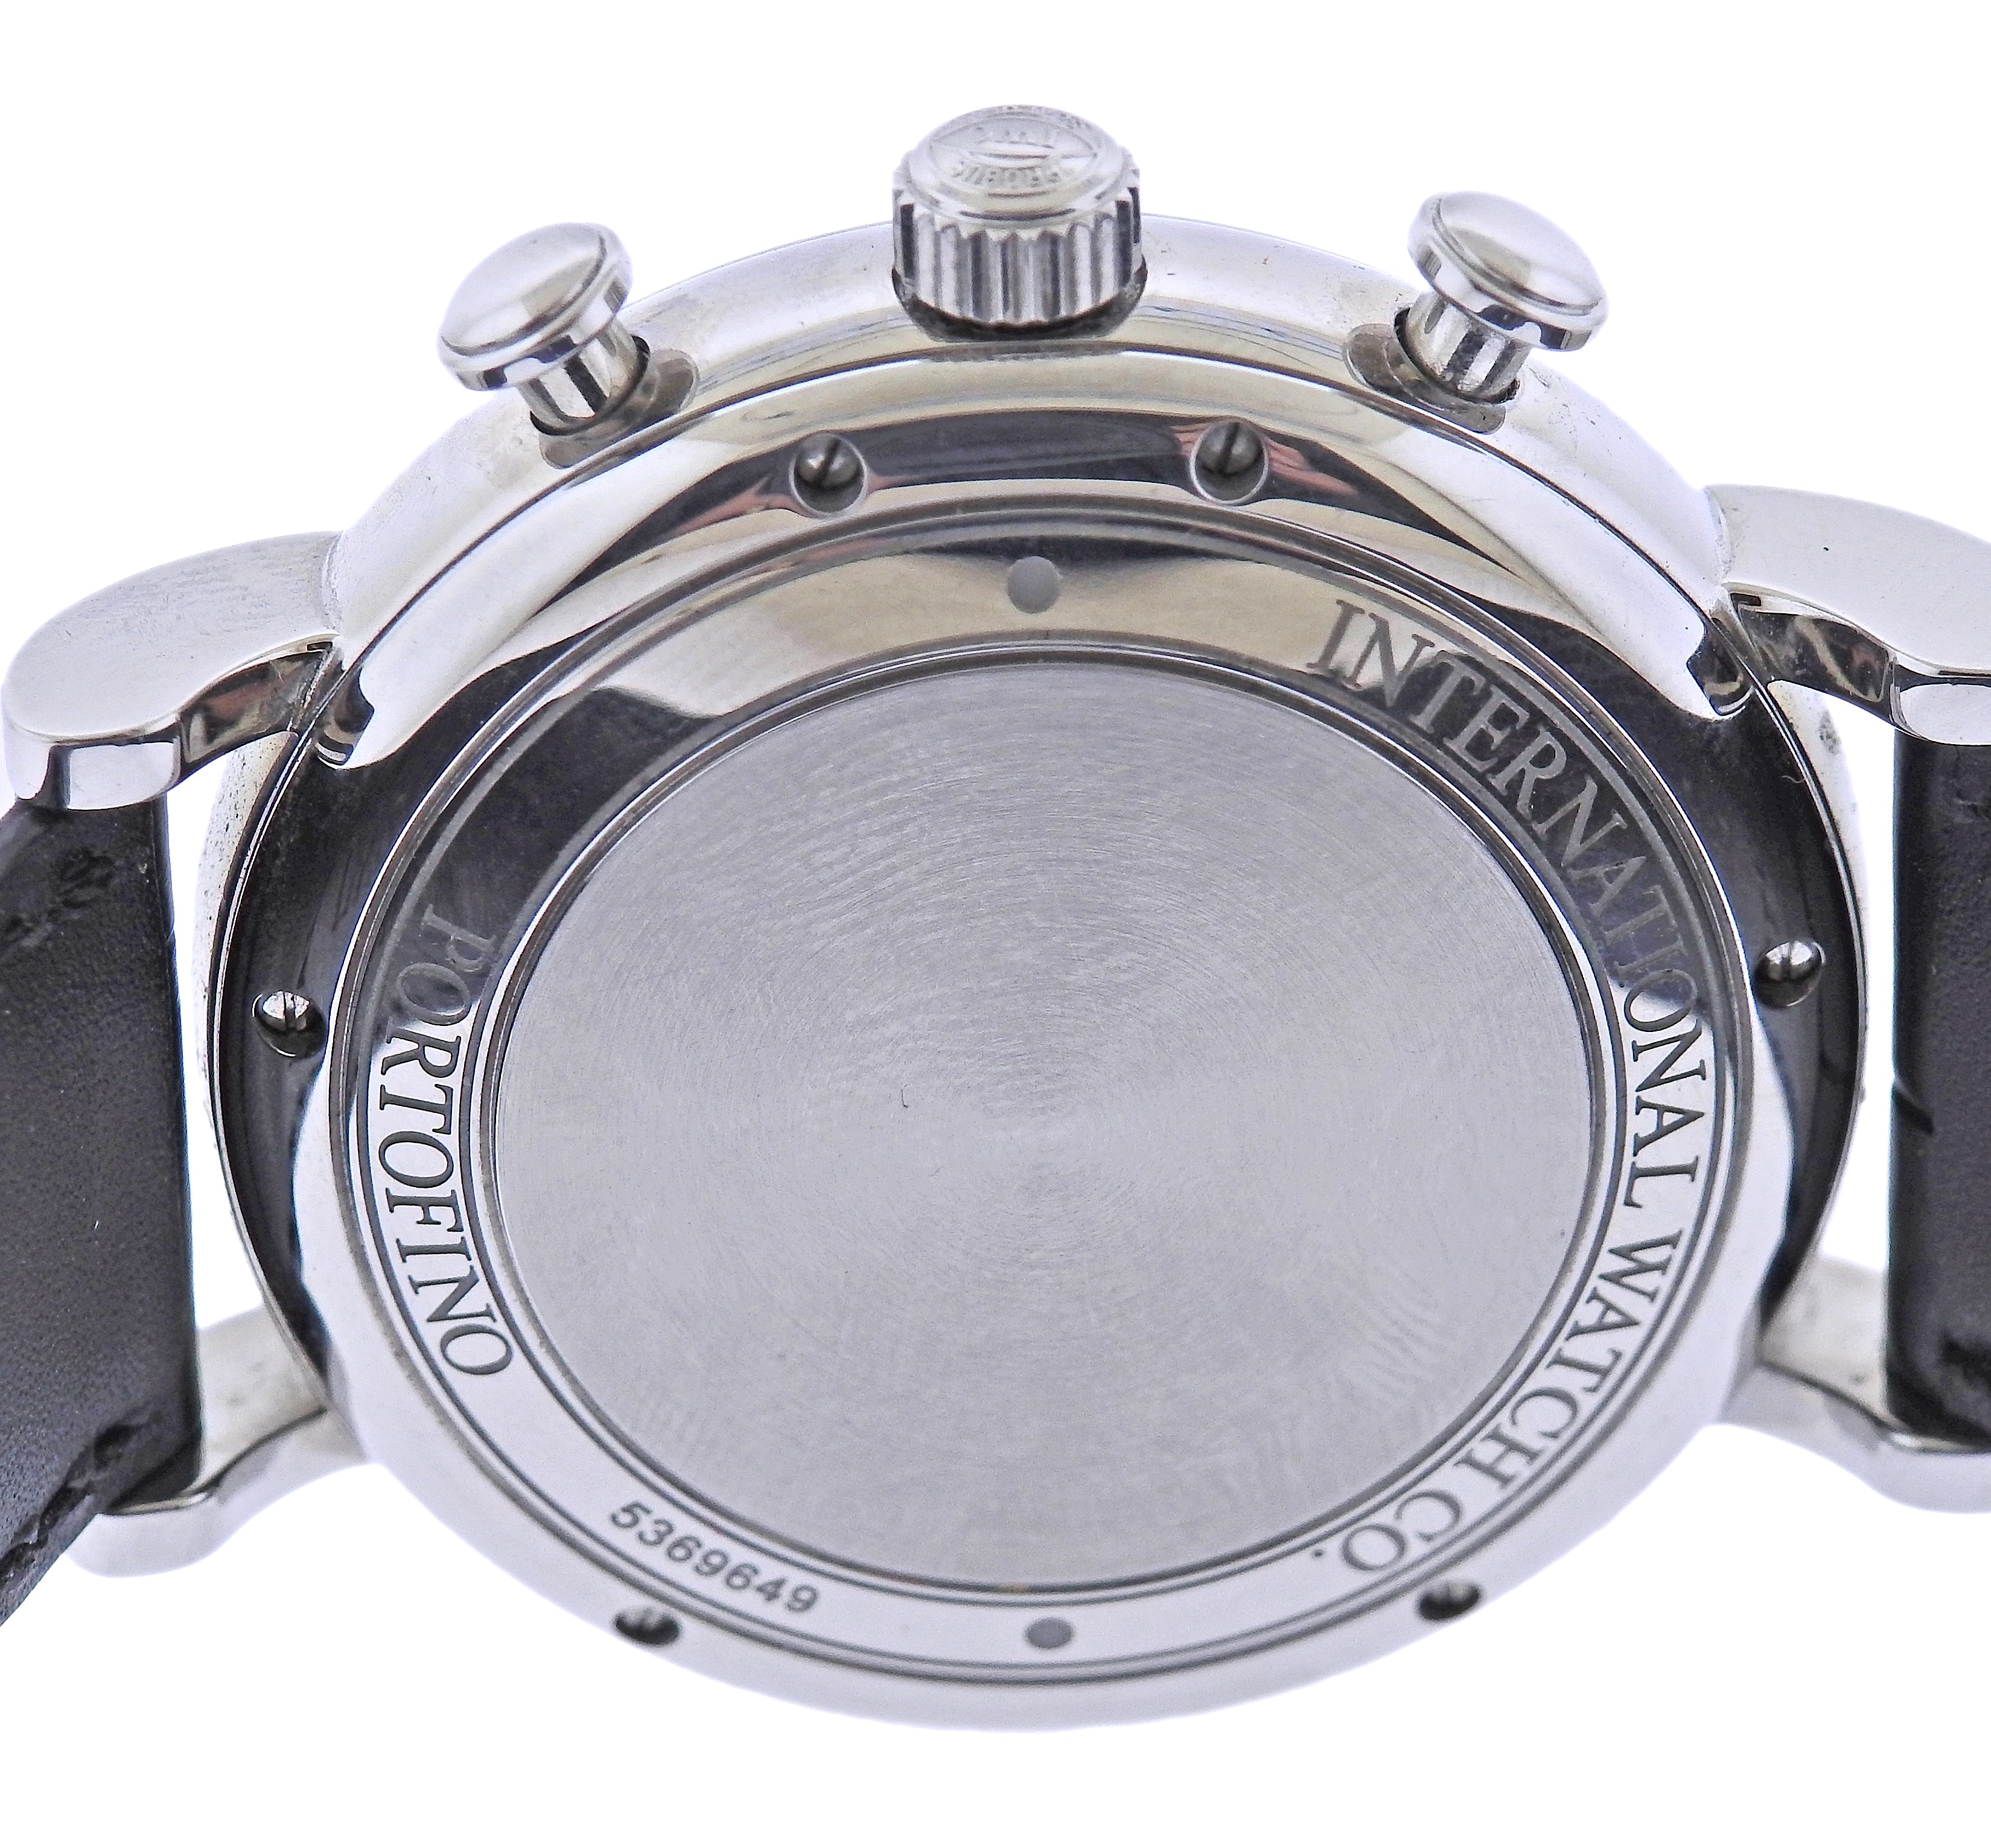 IWC Portofino Chronograph Automatic Men's Watch IW391002